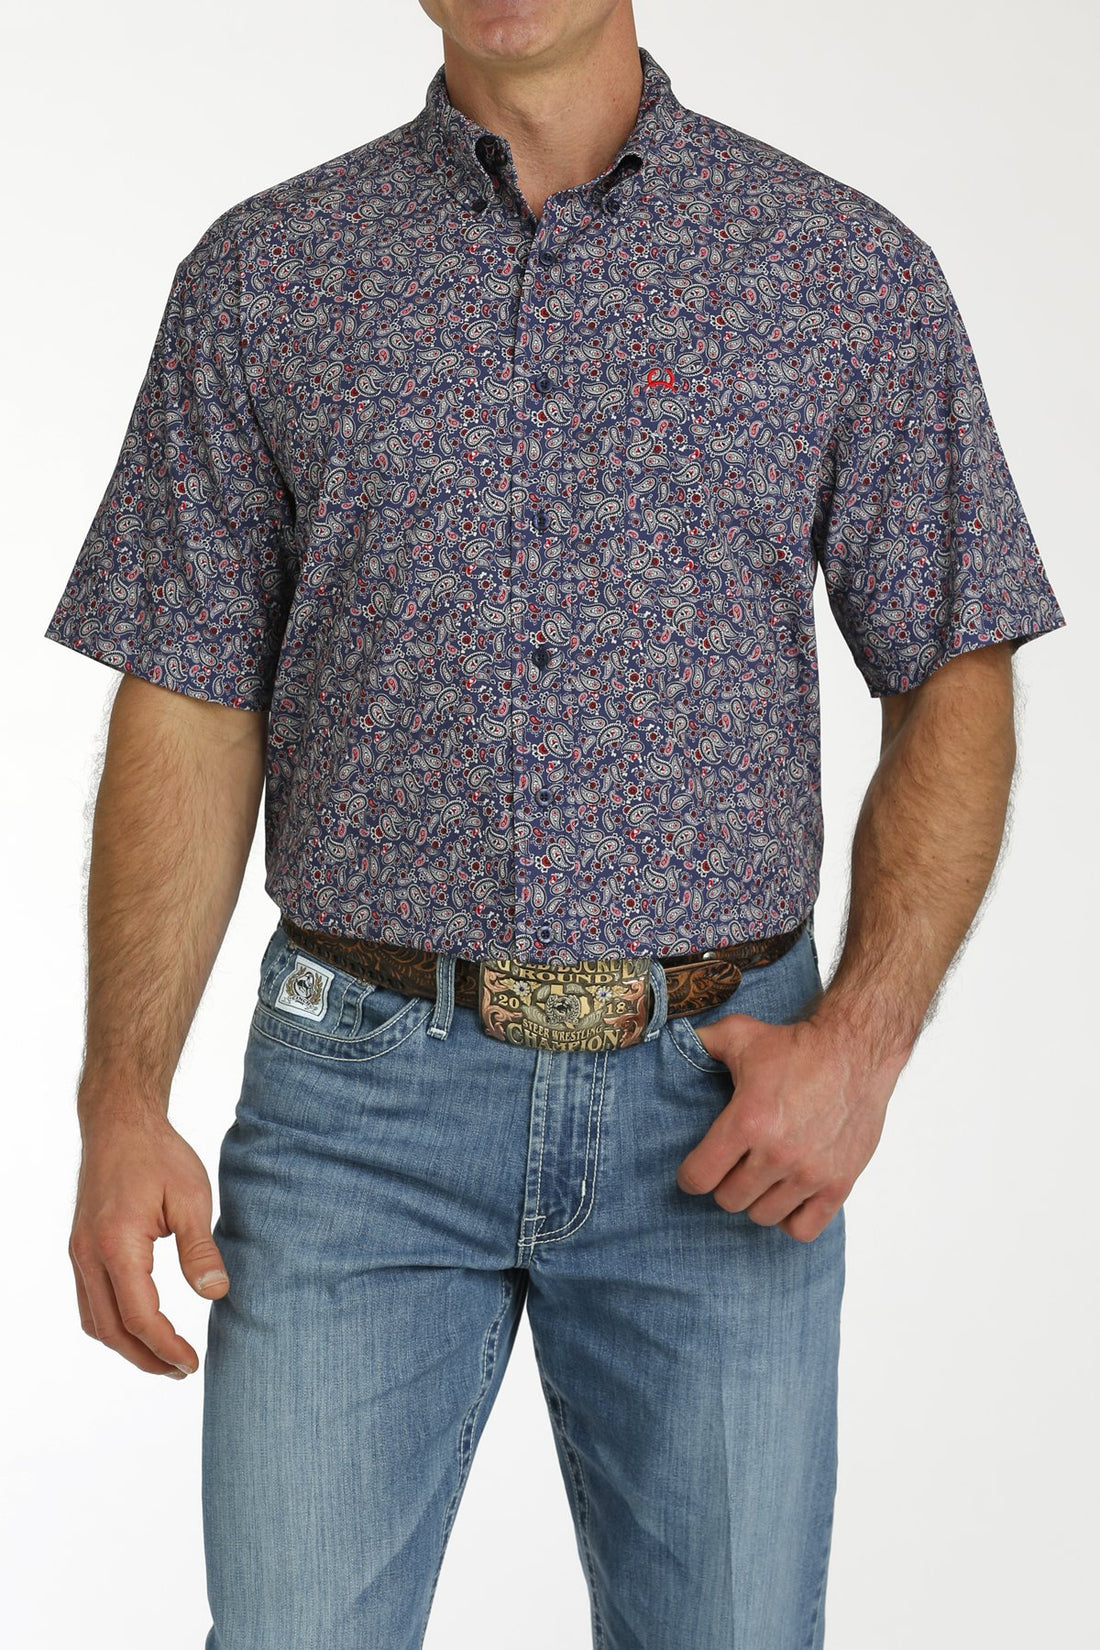 Cinch - Men's Paisley Print ArenaFlex Shirt | Mtw1704136